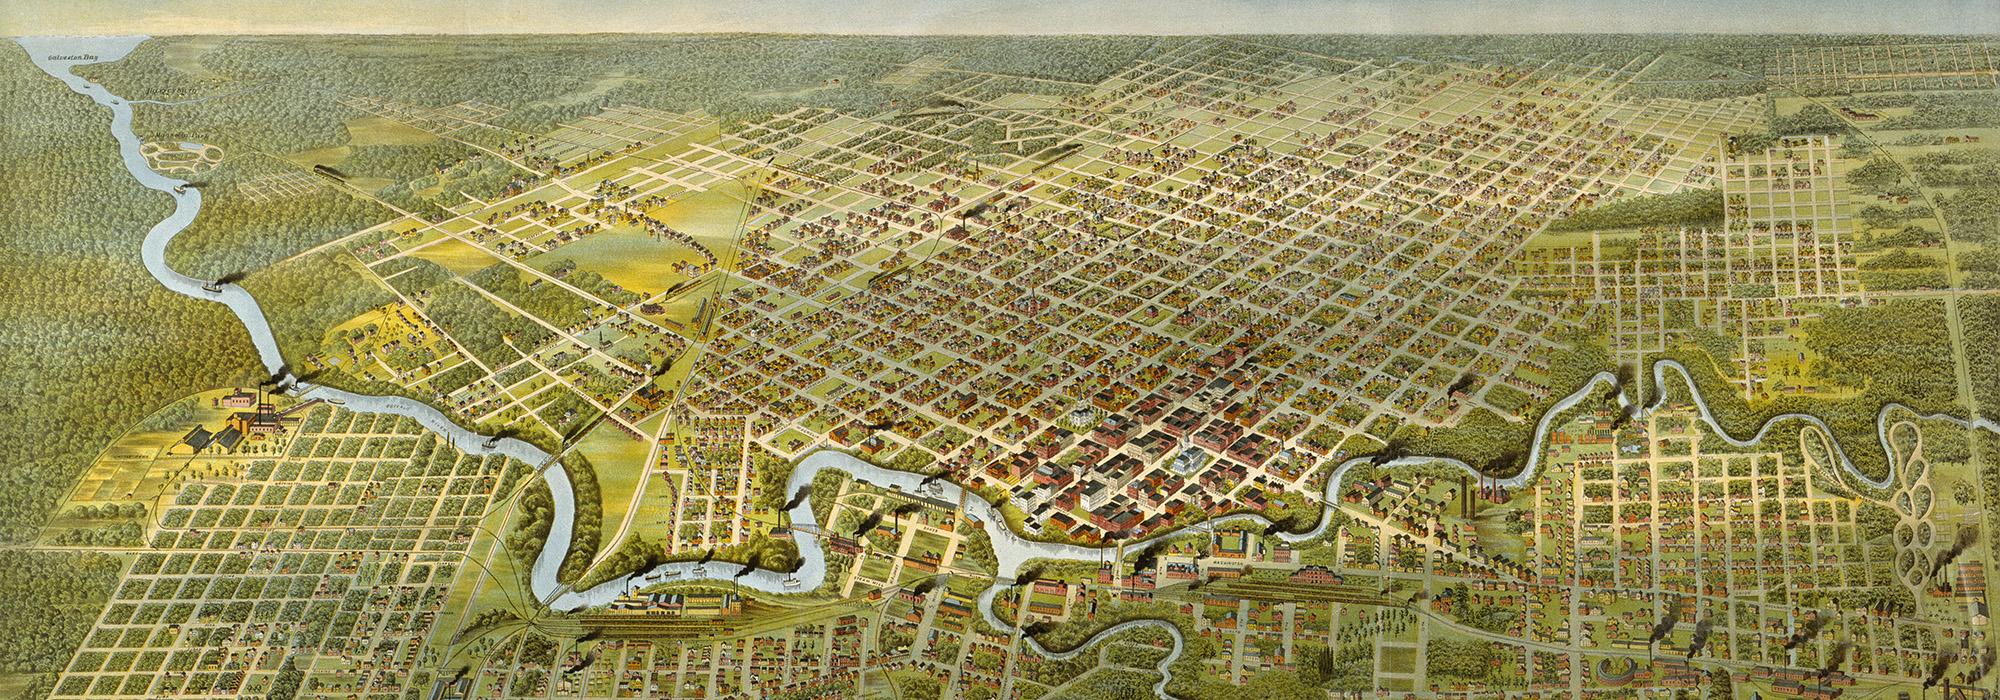 Houston, TX in 1891